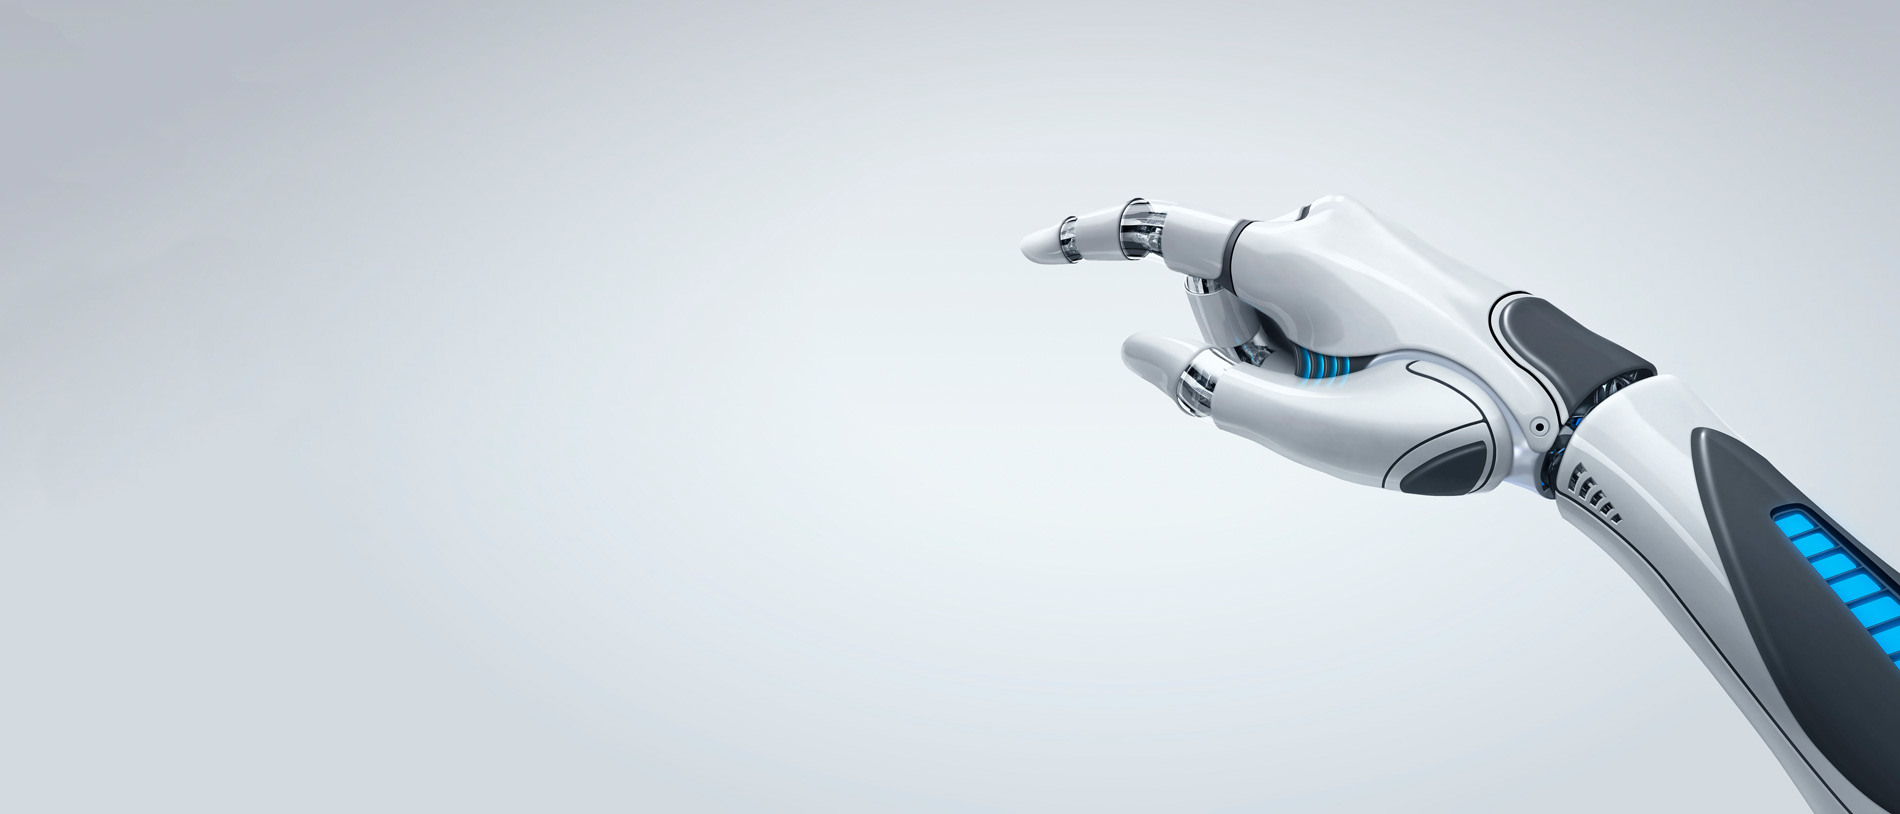 Robot hand, symbolising artificial intelligence